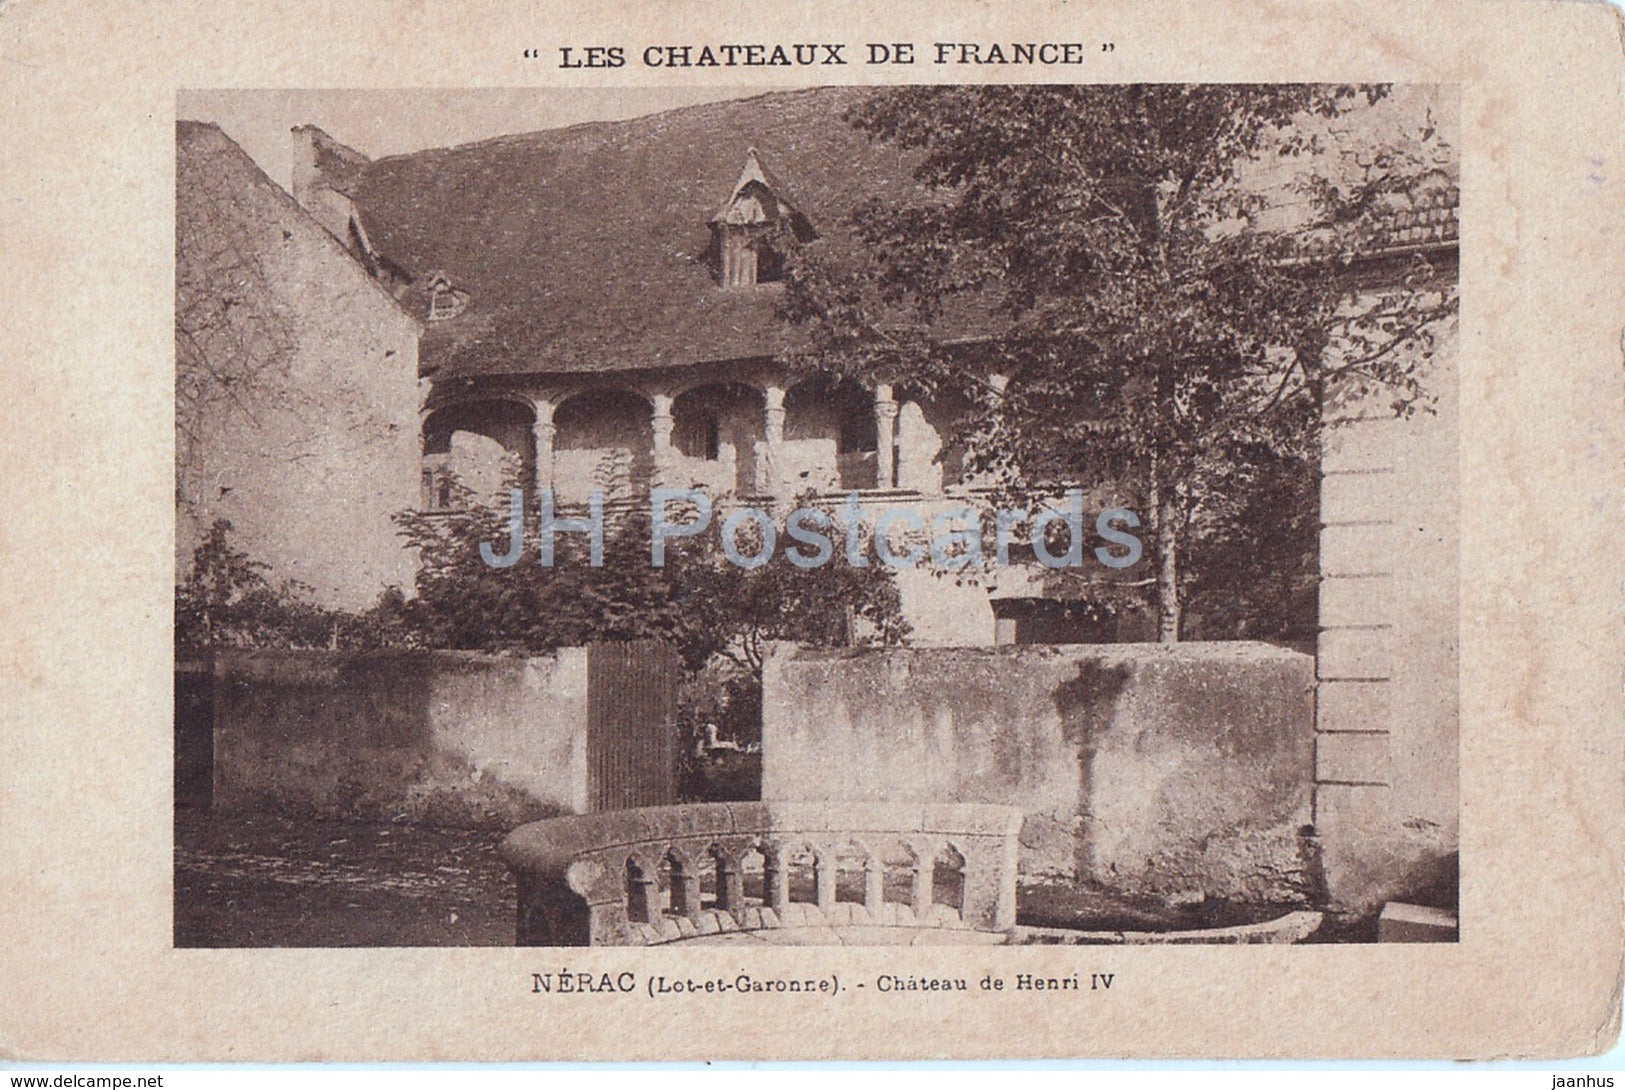 Nerac - Chateau de Henri IV - castle - old postcard - France - unused